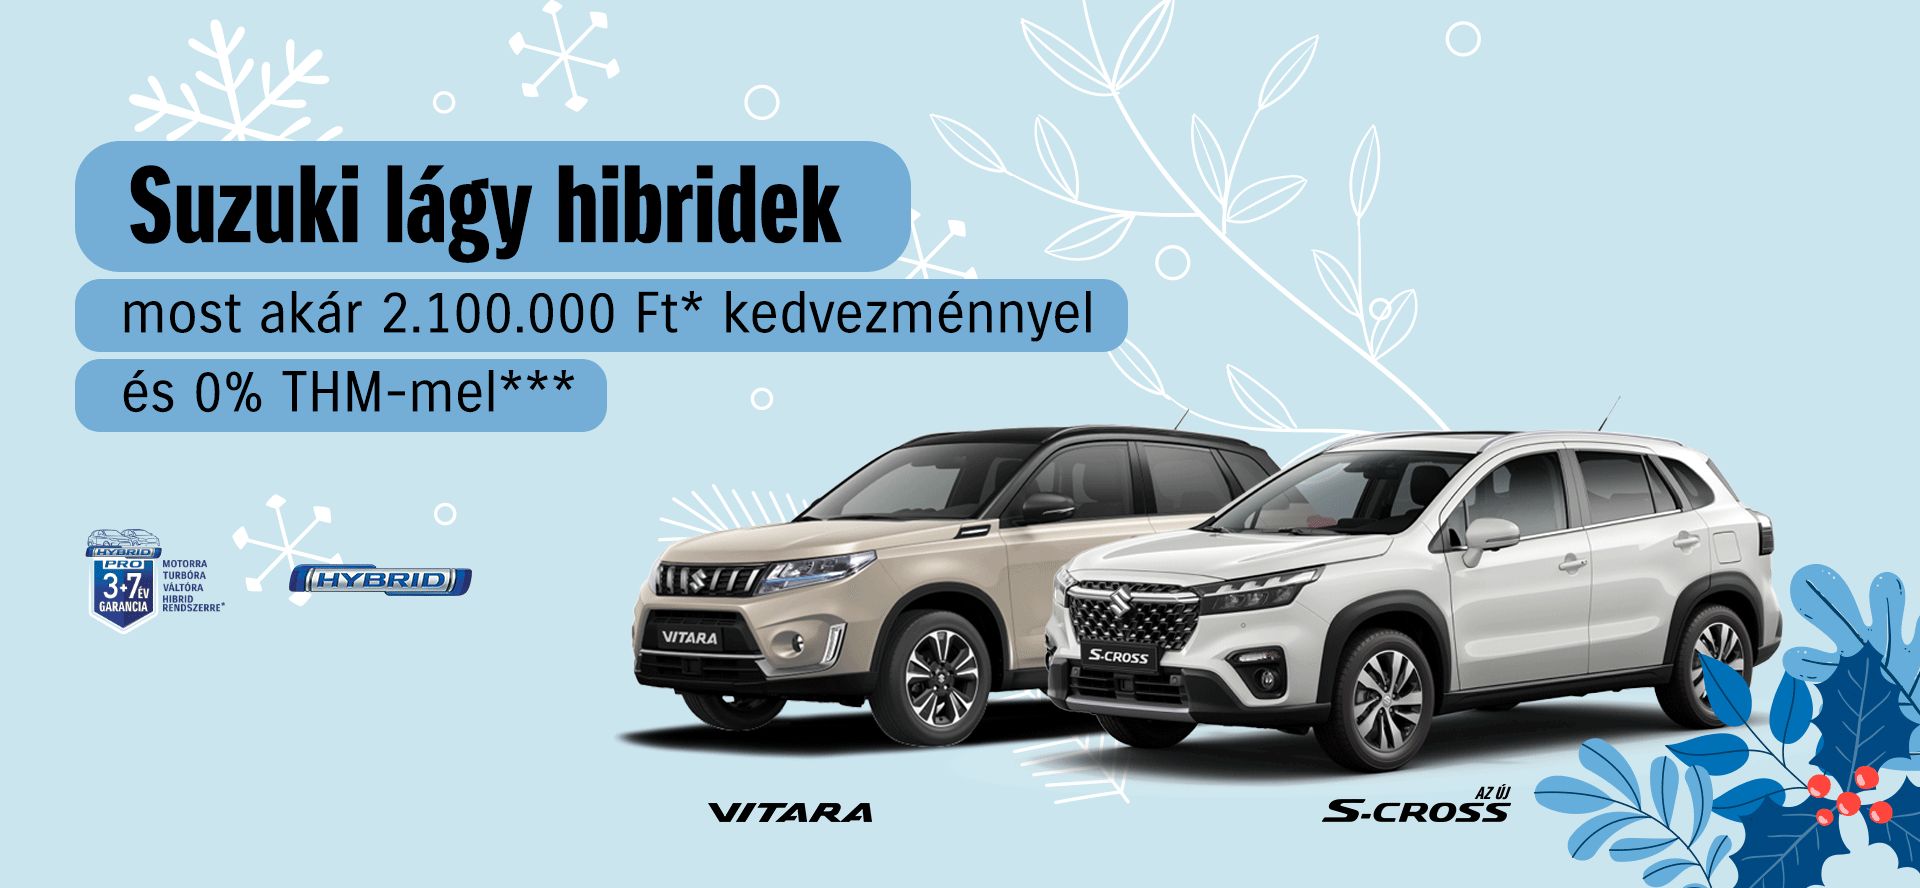 suzuki-hybridek-carnet-scross-vitara-winter-plus-finanszirozas-carnet